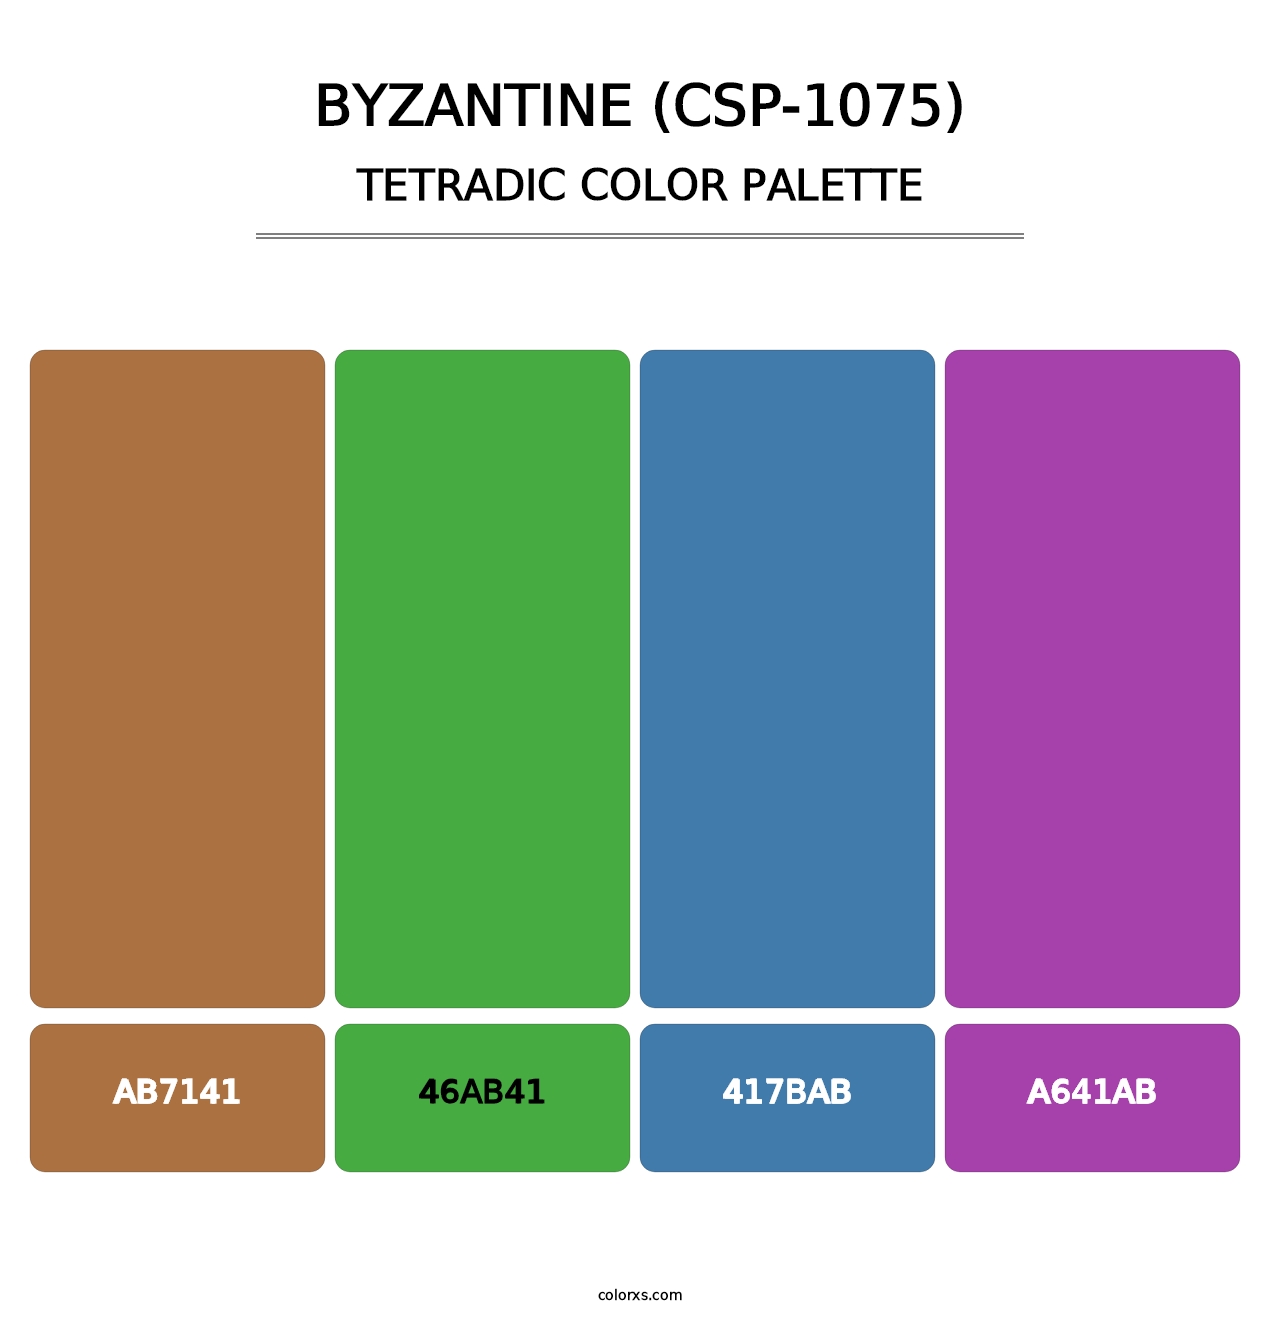 Byzantine (CSP-1075) - Tetradic Color Palette